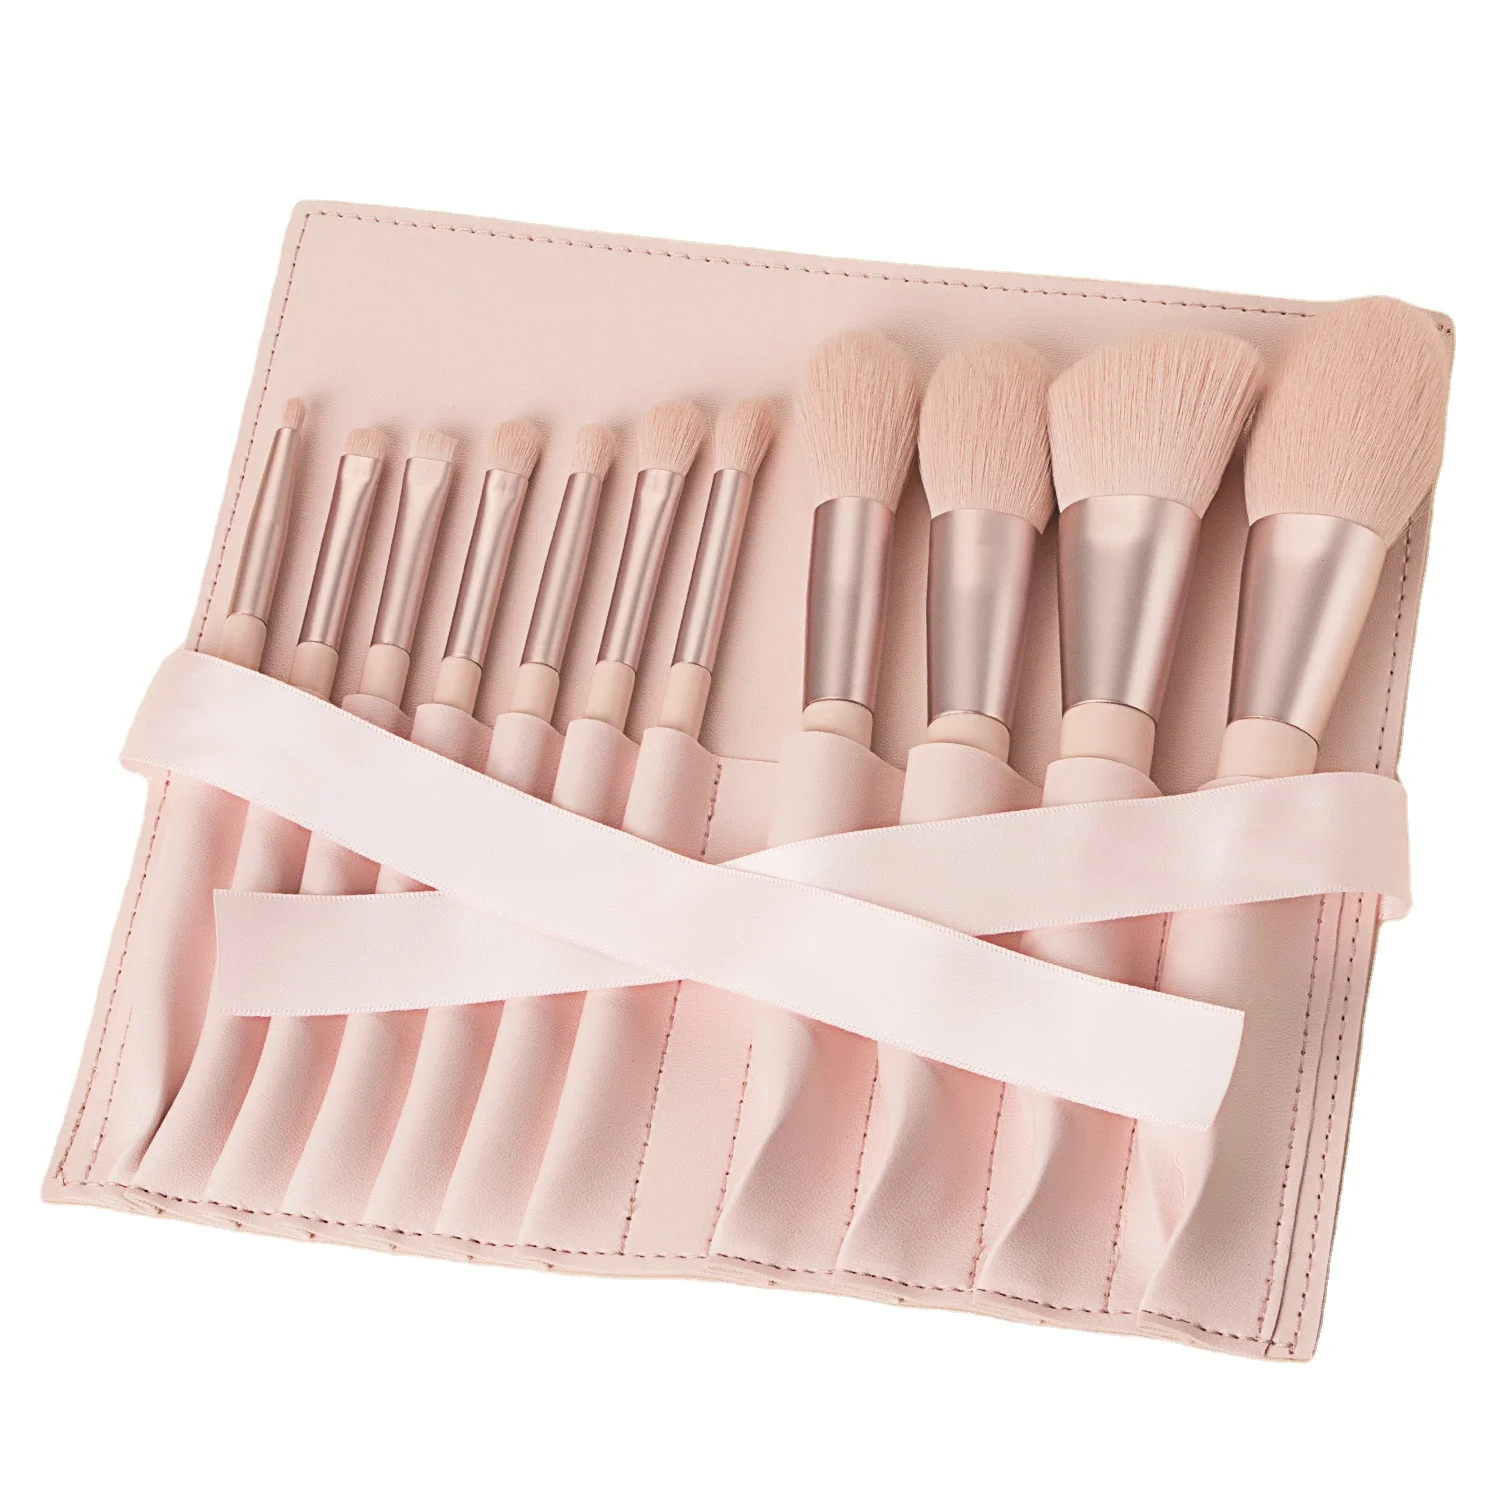 

Makeup Brush Set 11pcs Premium Cosmetic Brush for Foundation Blush Concealer Eyeshadow eyebrow highlight Pink Make up brush